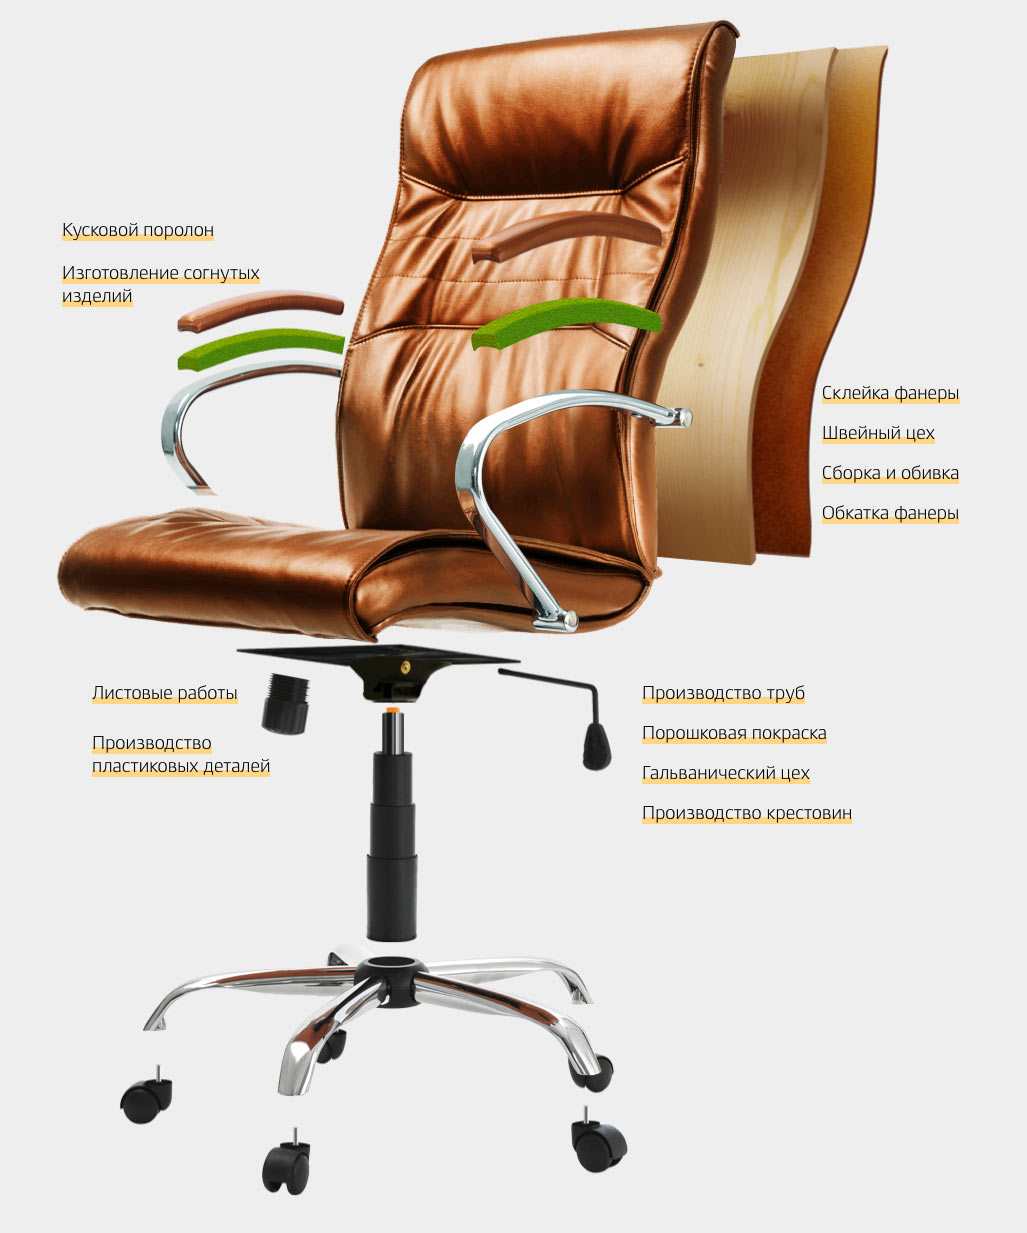 fabrikant site chair scheme mobile